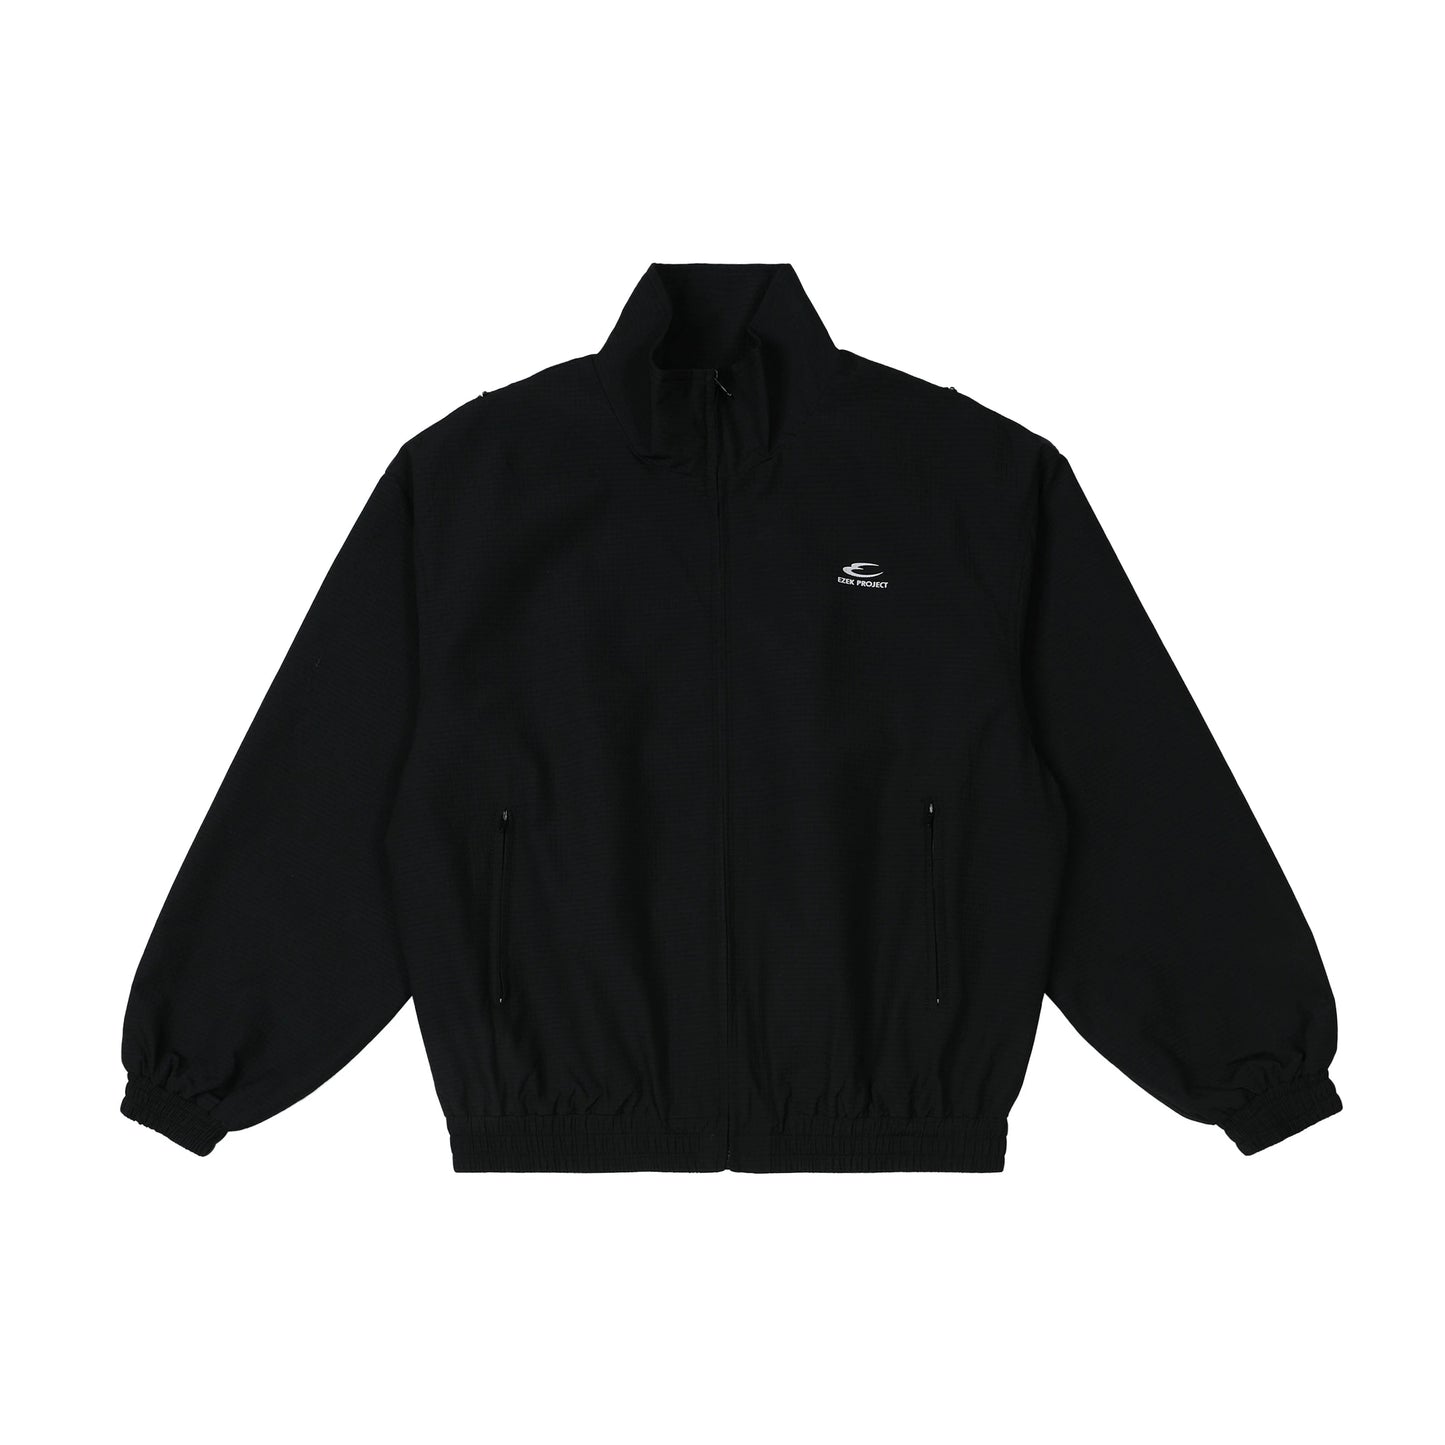 Retro Black Casual Sport Jacket